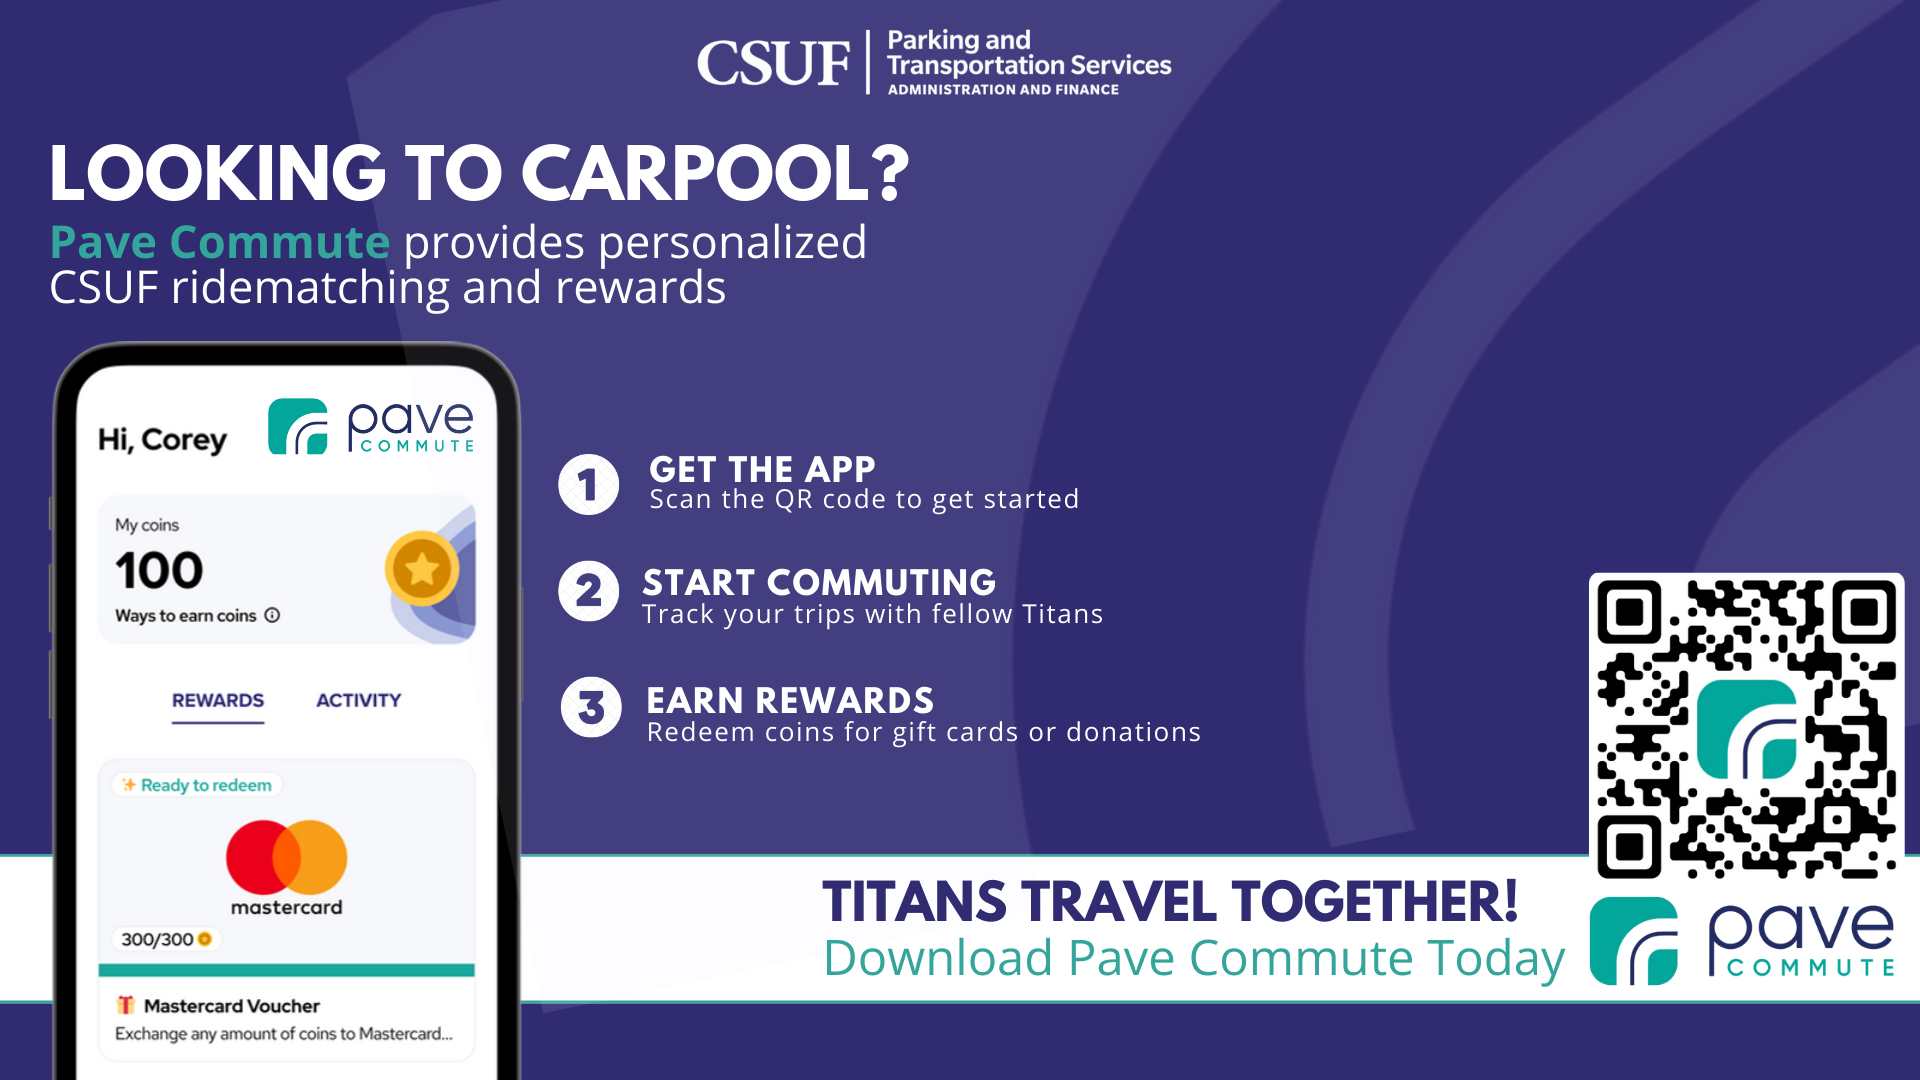 Pave Commute app download instructions